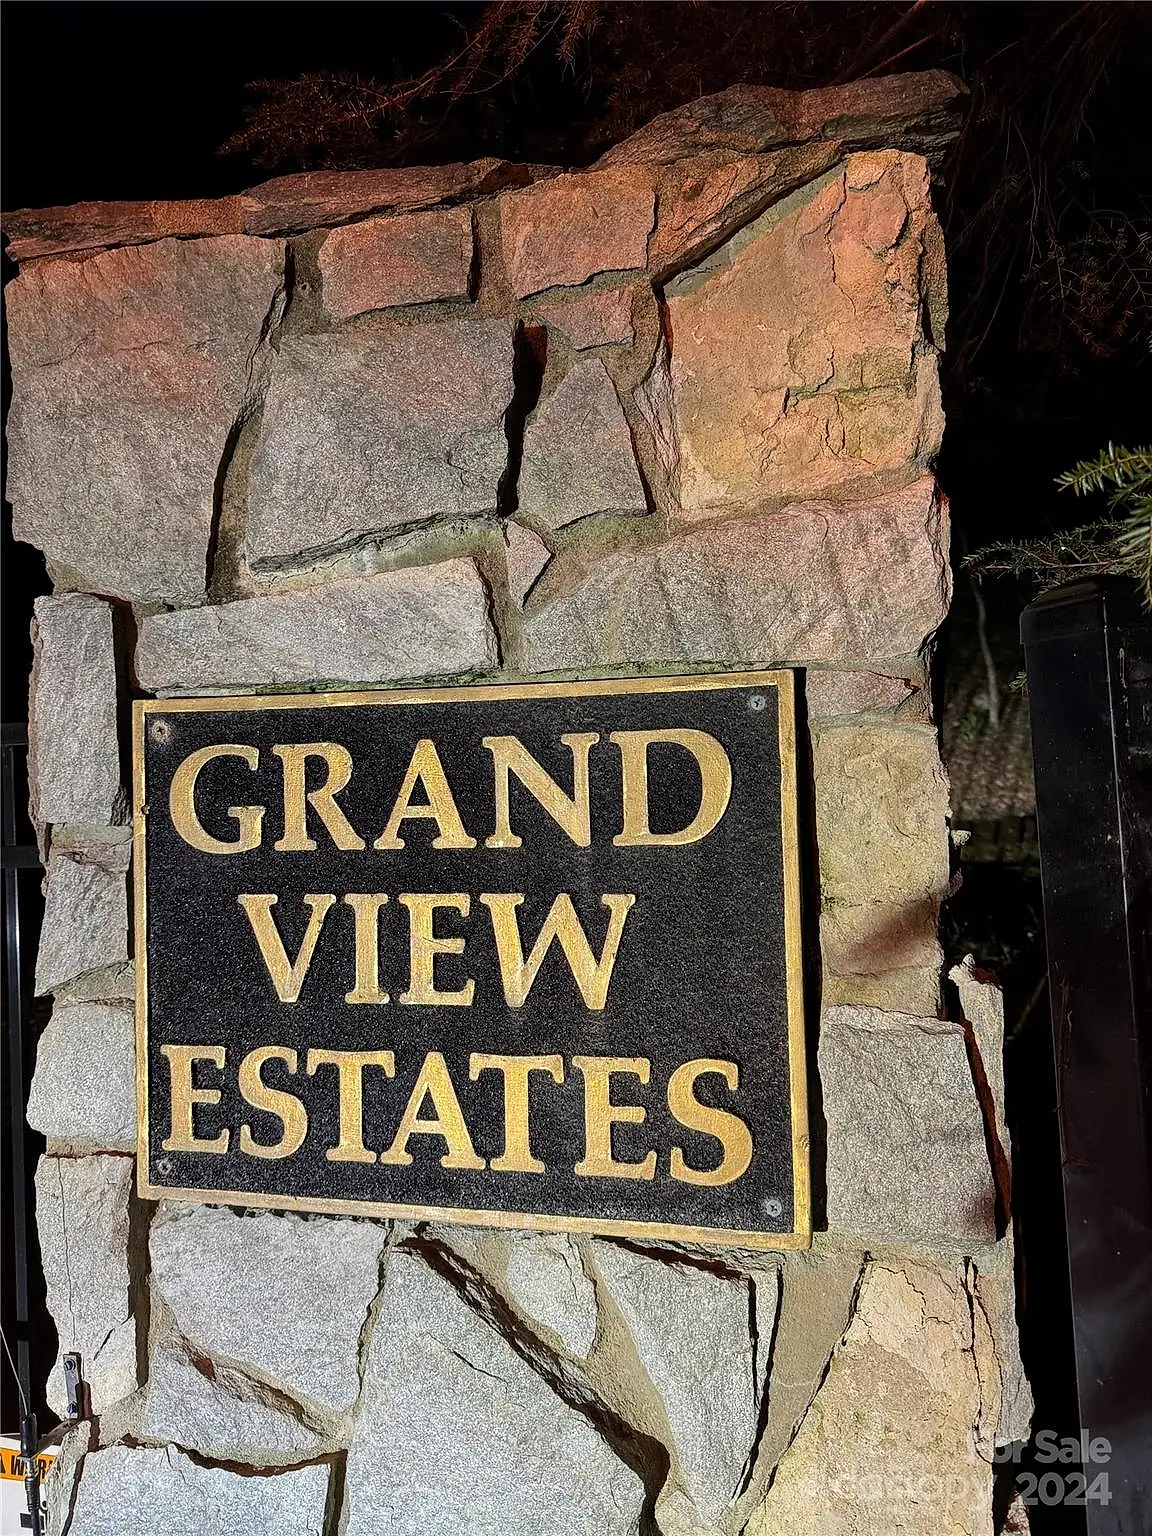 000 Grand View Estates